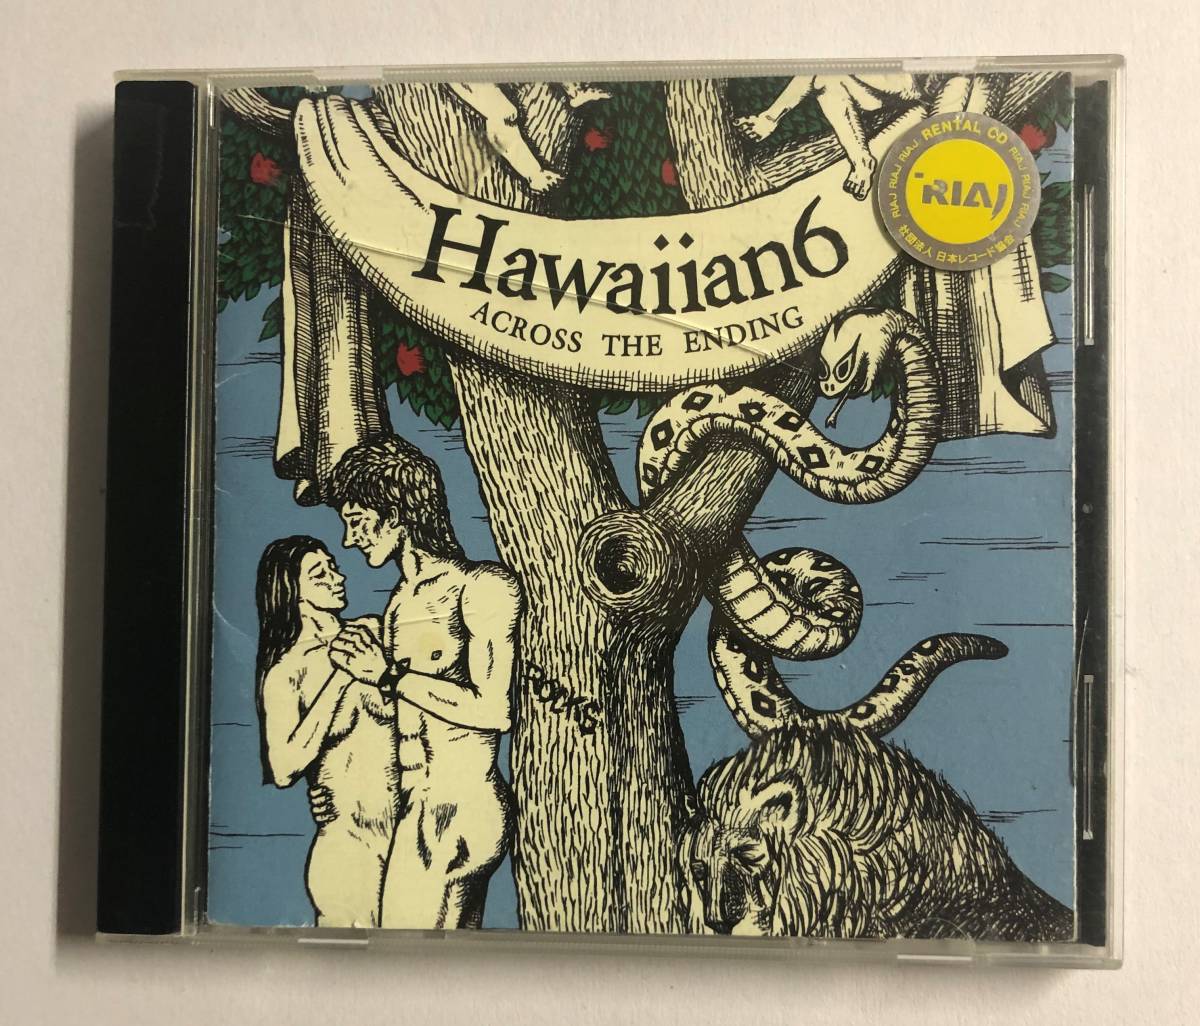 【CD】ACROSS THE ENDING HAWAIIAN6【レンタル落ち】@CD-09U_画像1